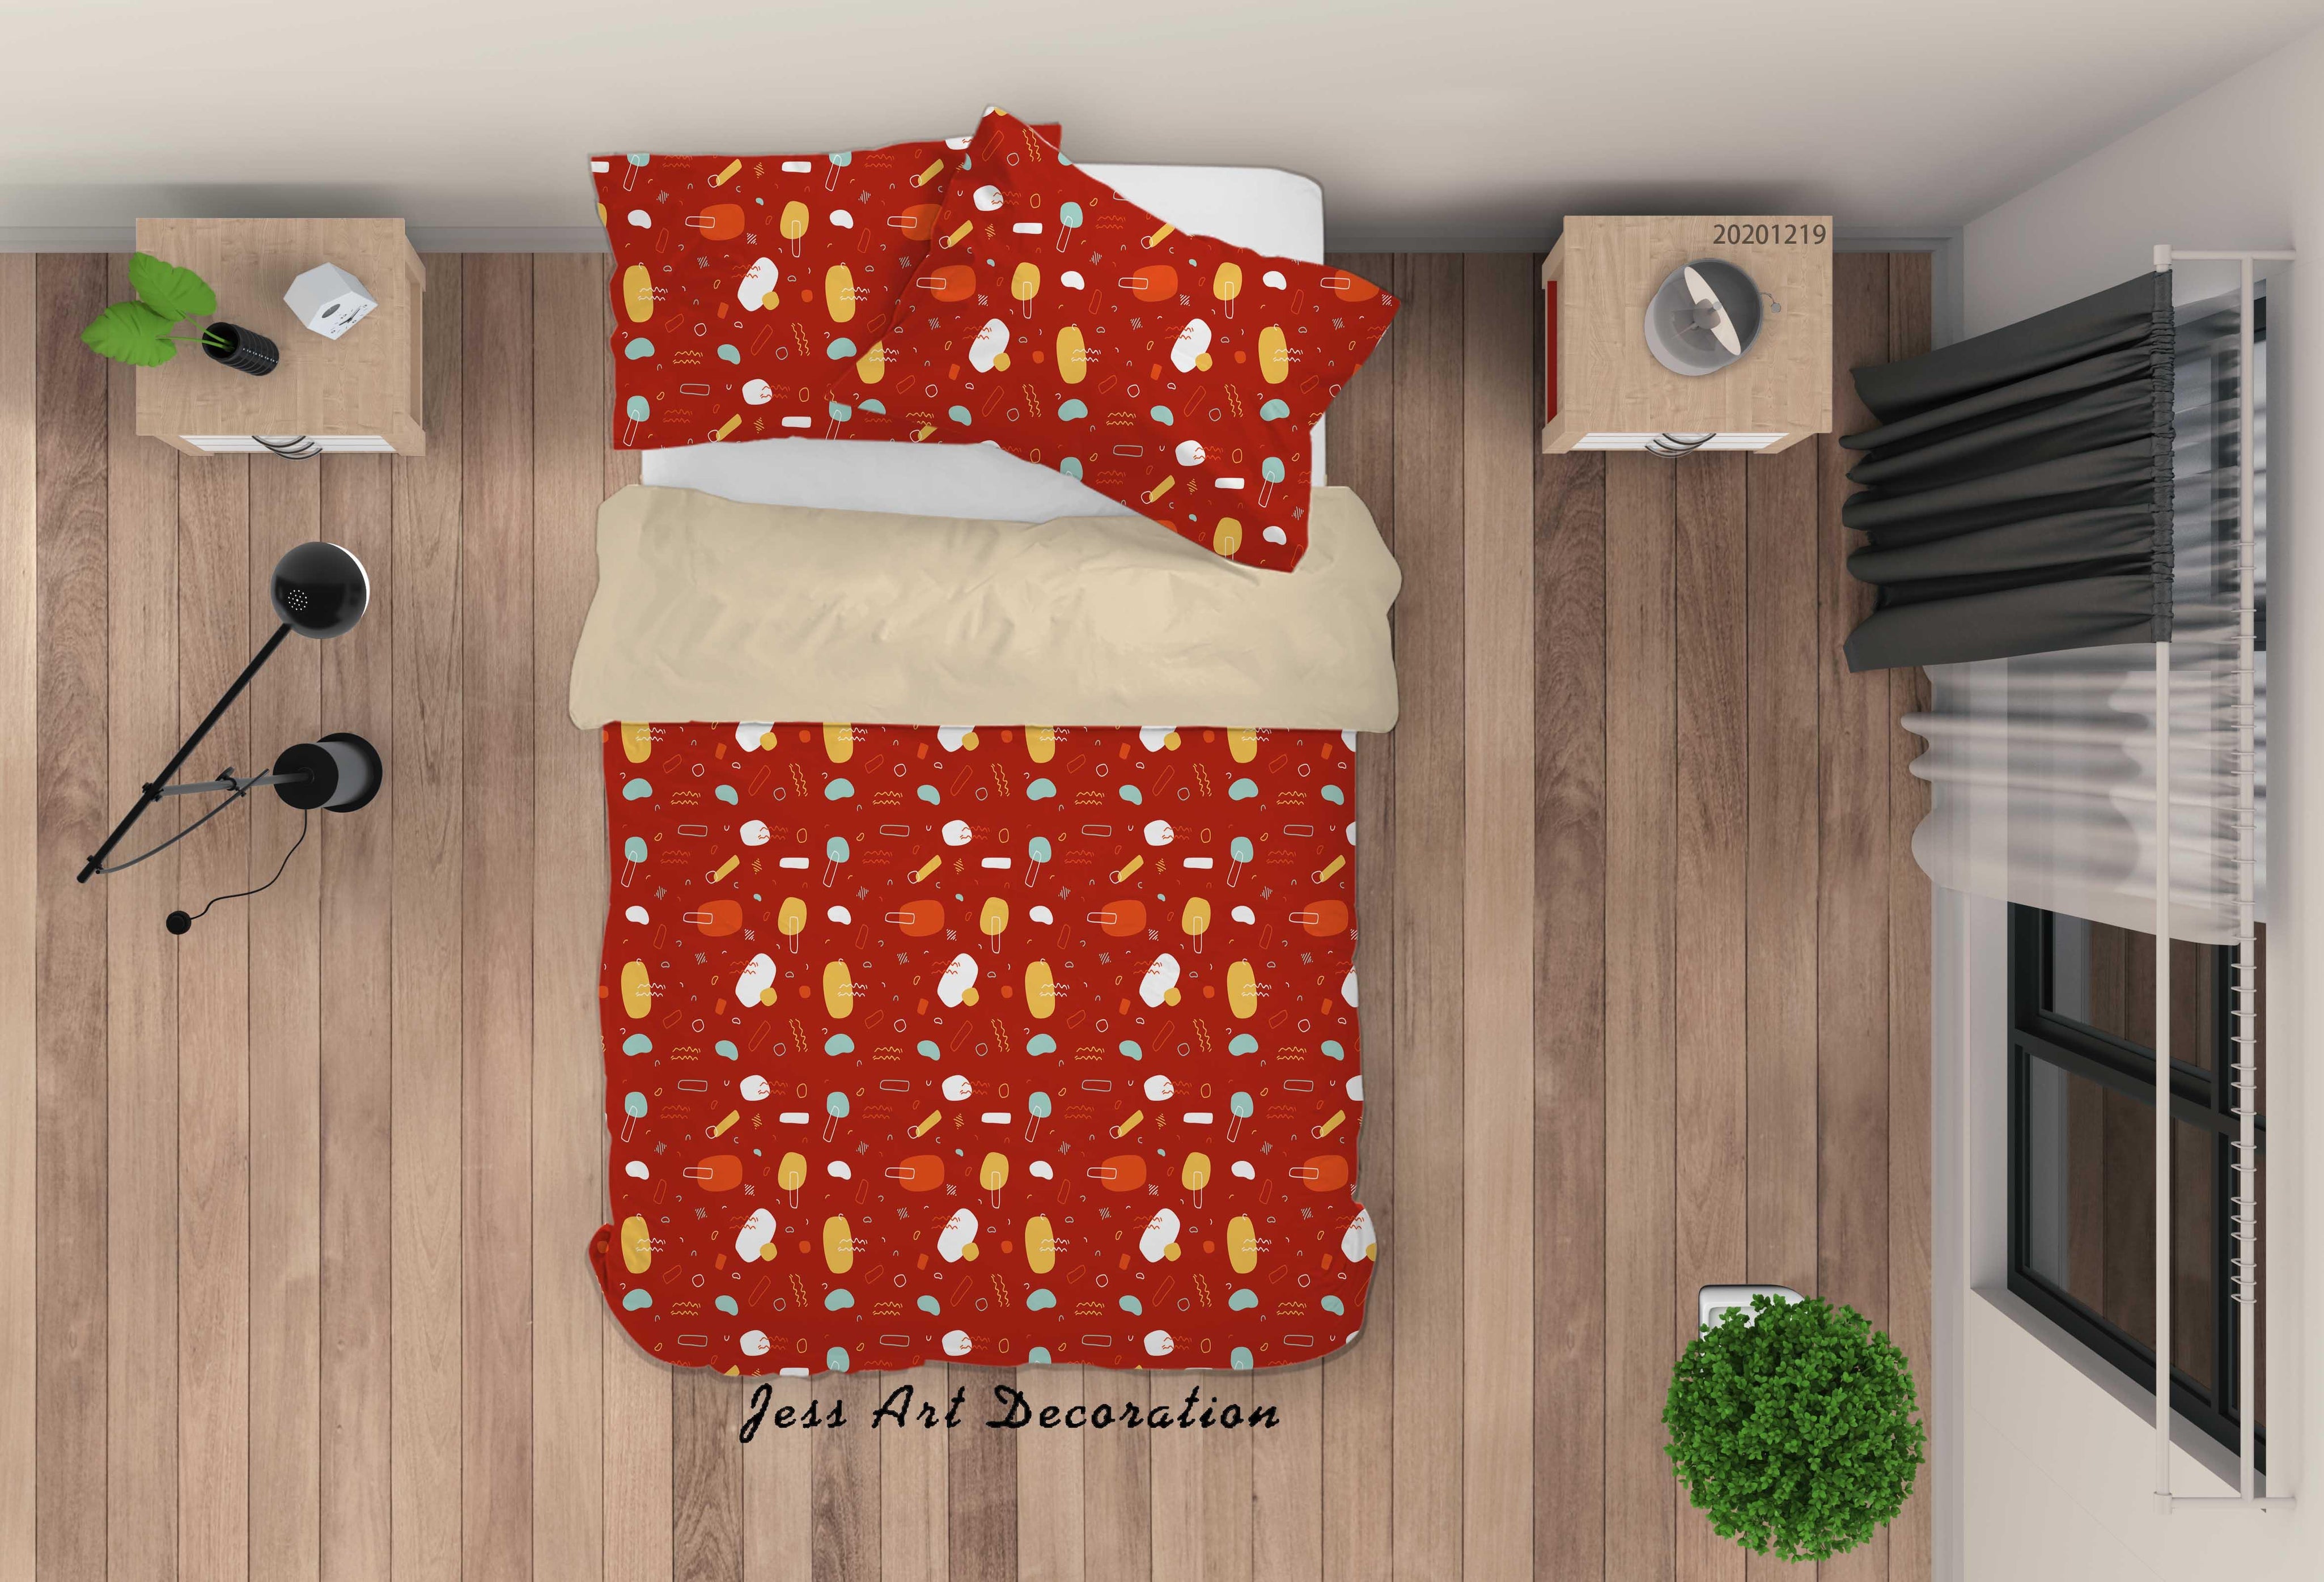 3D Abstract Geometric Pattern Quilt Cover Set Bedding Set Duvet Cover Pillowcases 95- Jess Art Decoration